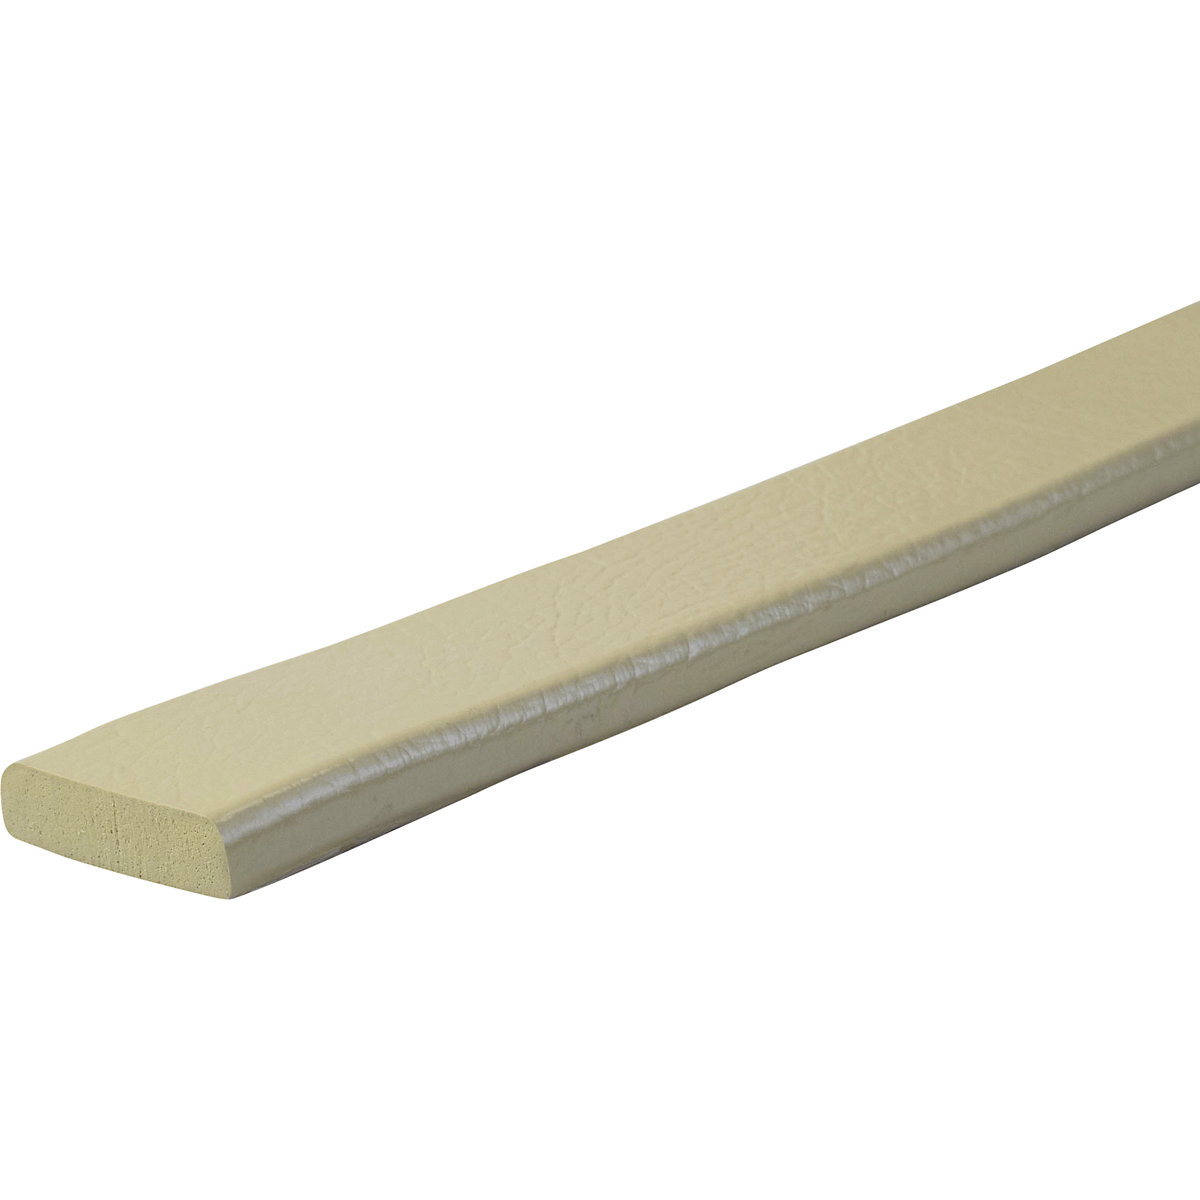 Knuffi®-oppervlaktebescherming – SHG, type F, stuk van 1 m, beige-30